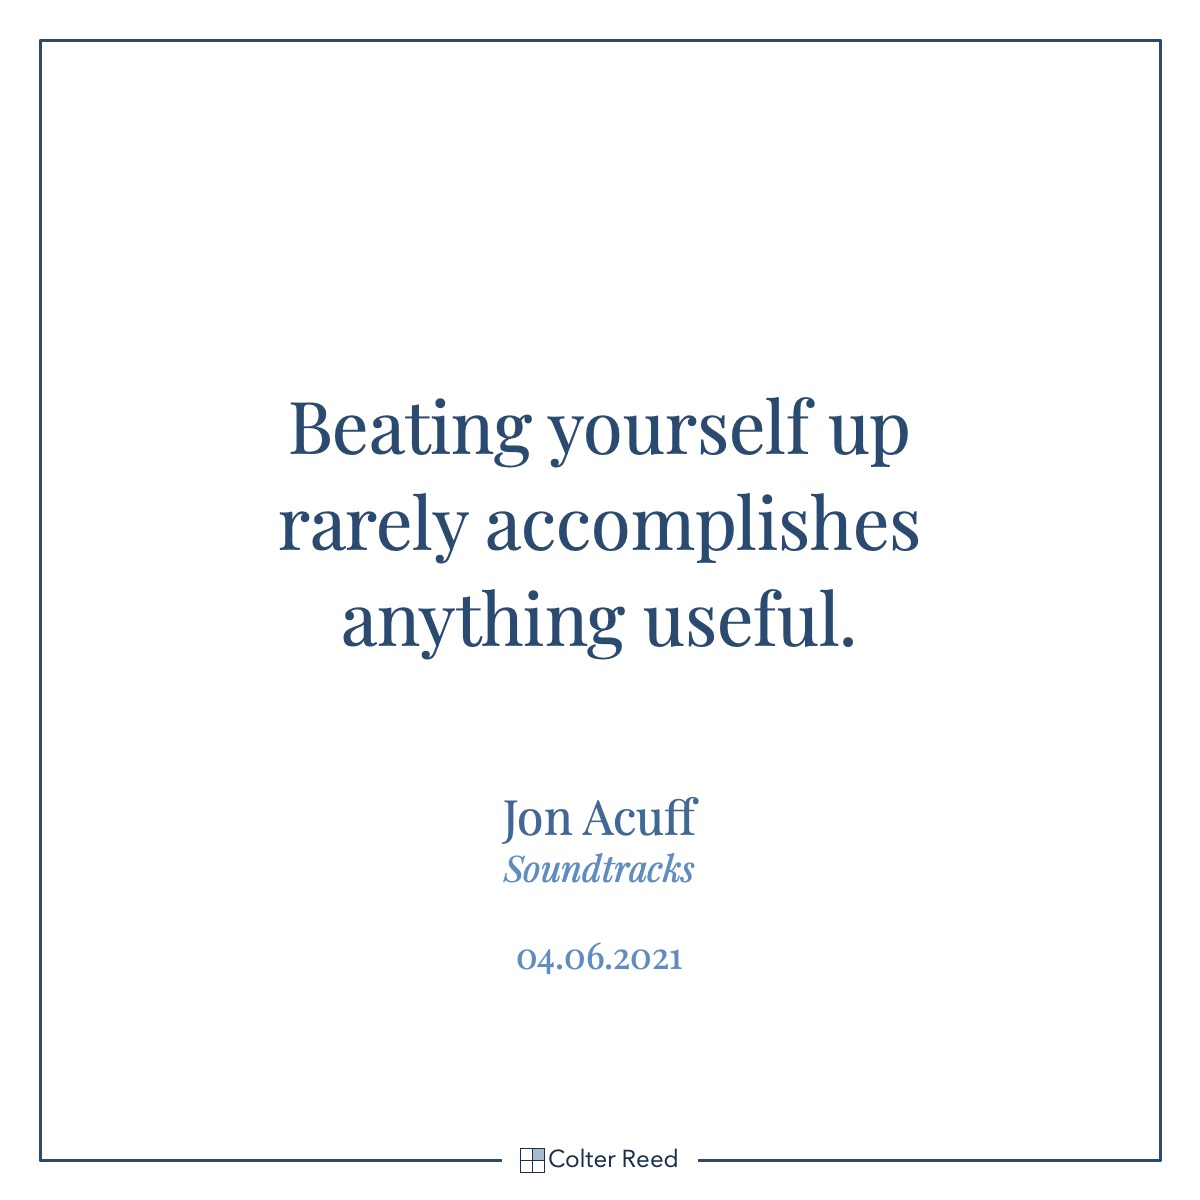 Beating yourself up rarely accomplishes anything useful. —Jon Acuff